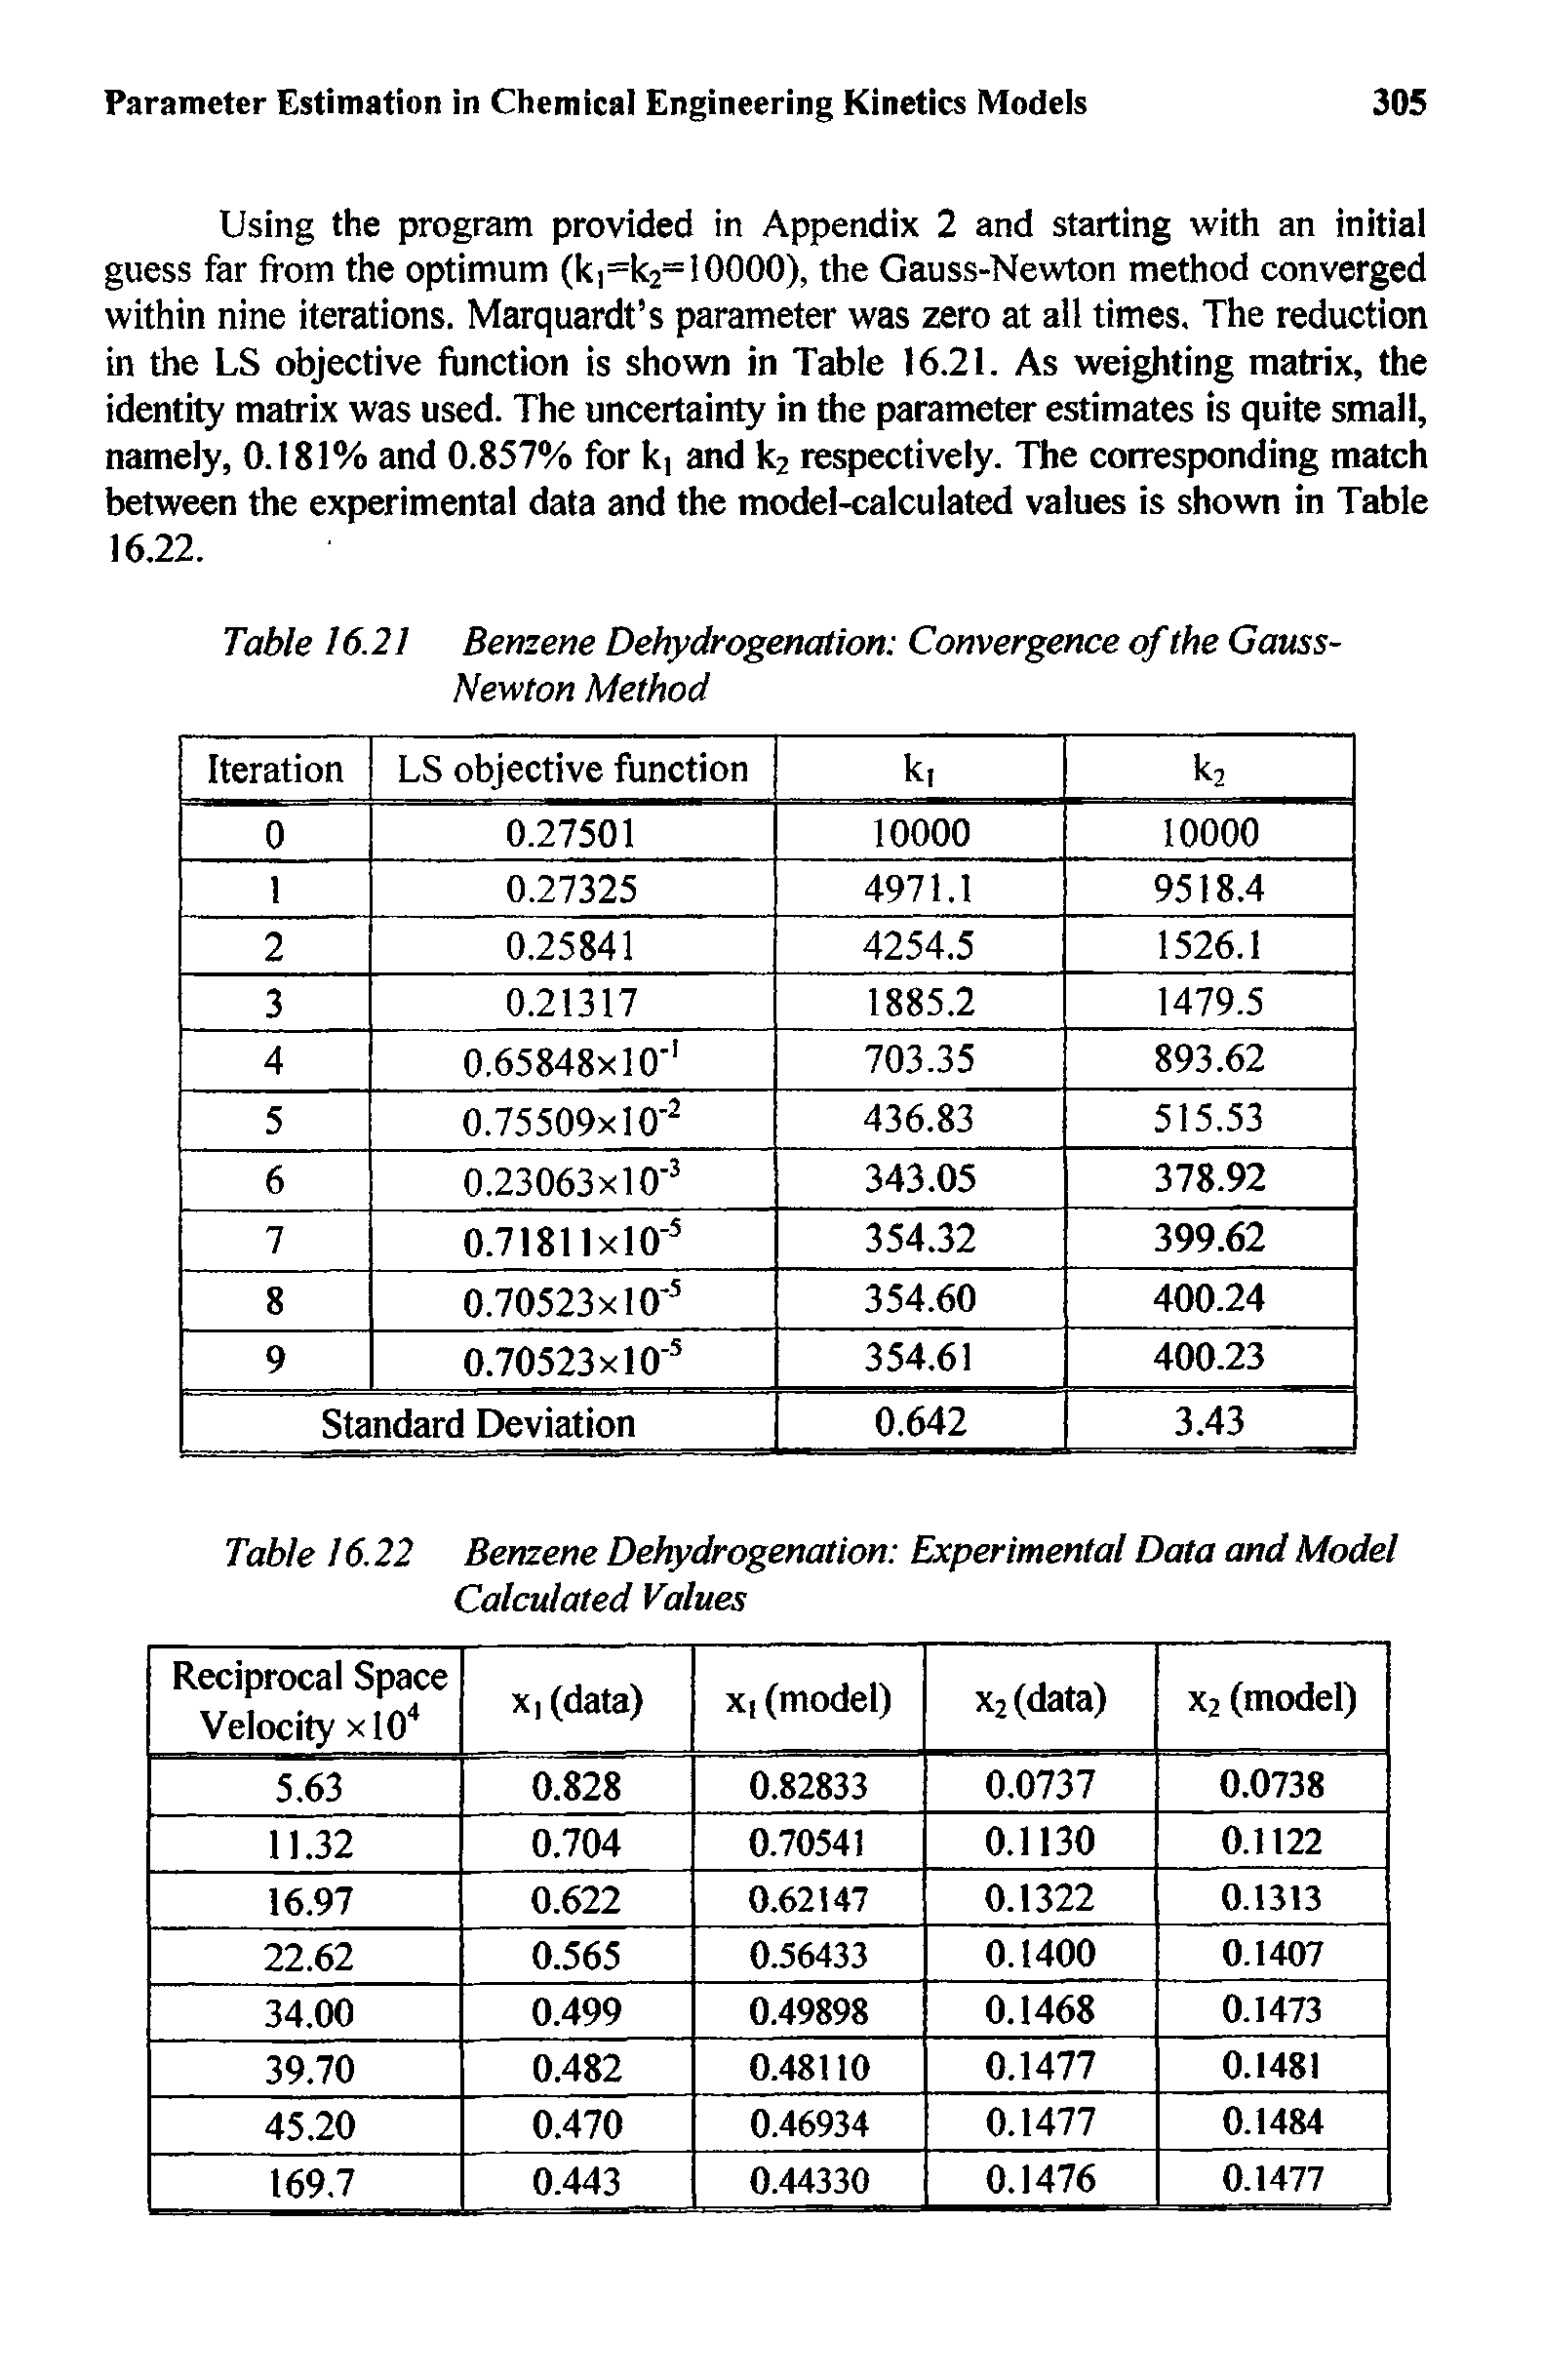 Table 16.21 Benzene Dehydrogenation Convergence of the Gauss-Newton Method...